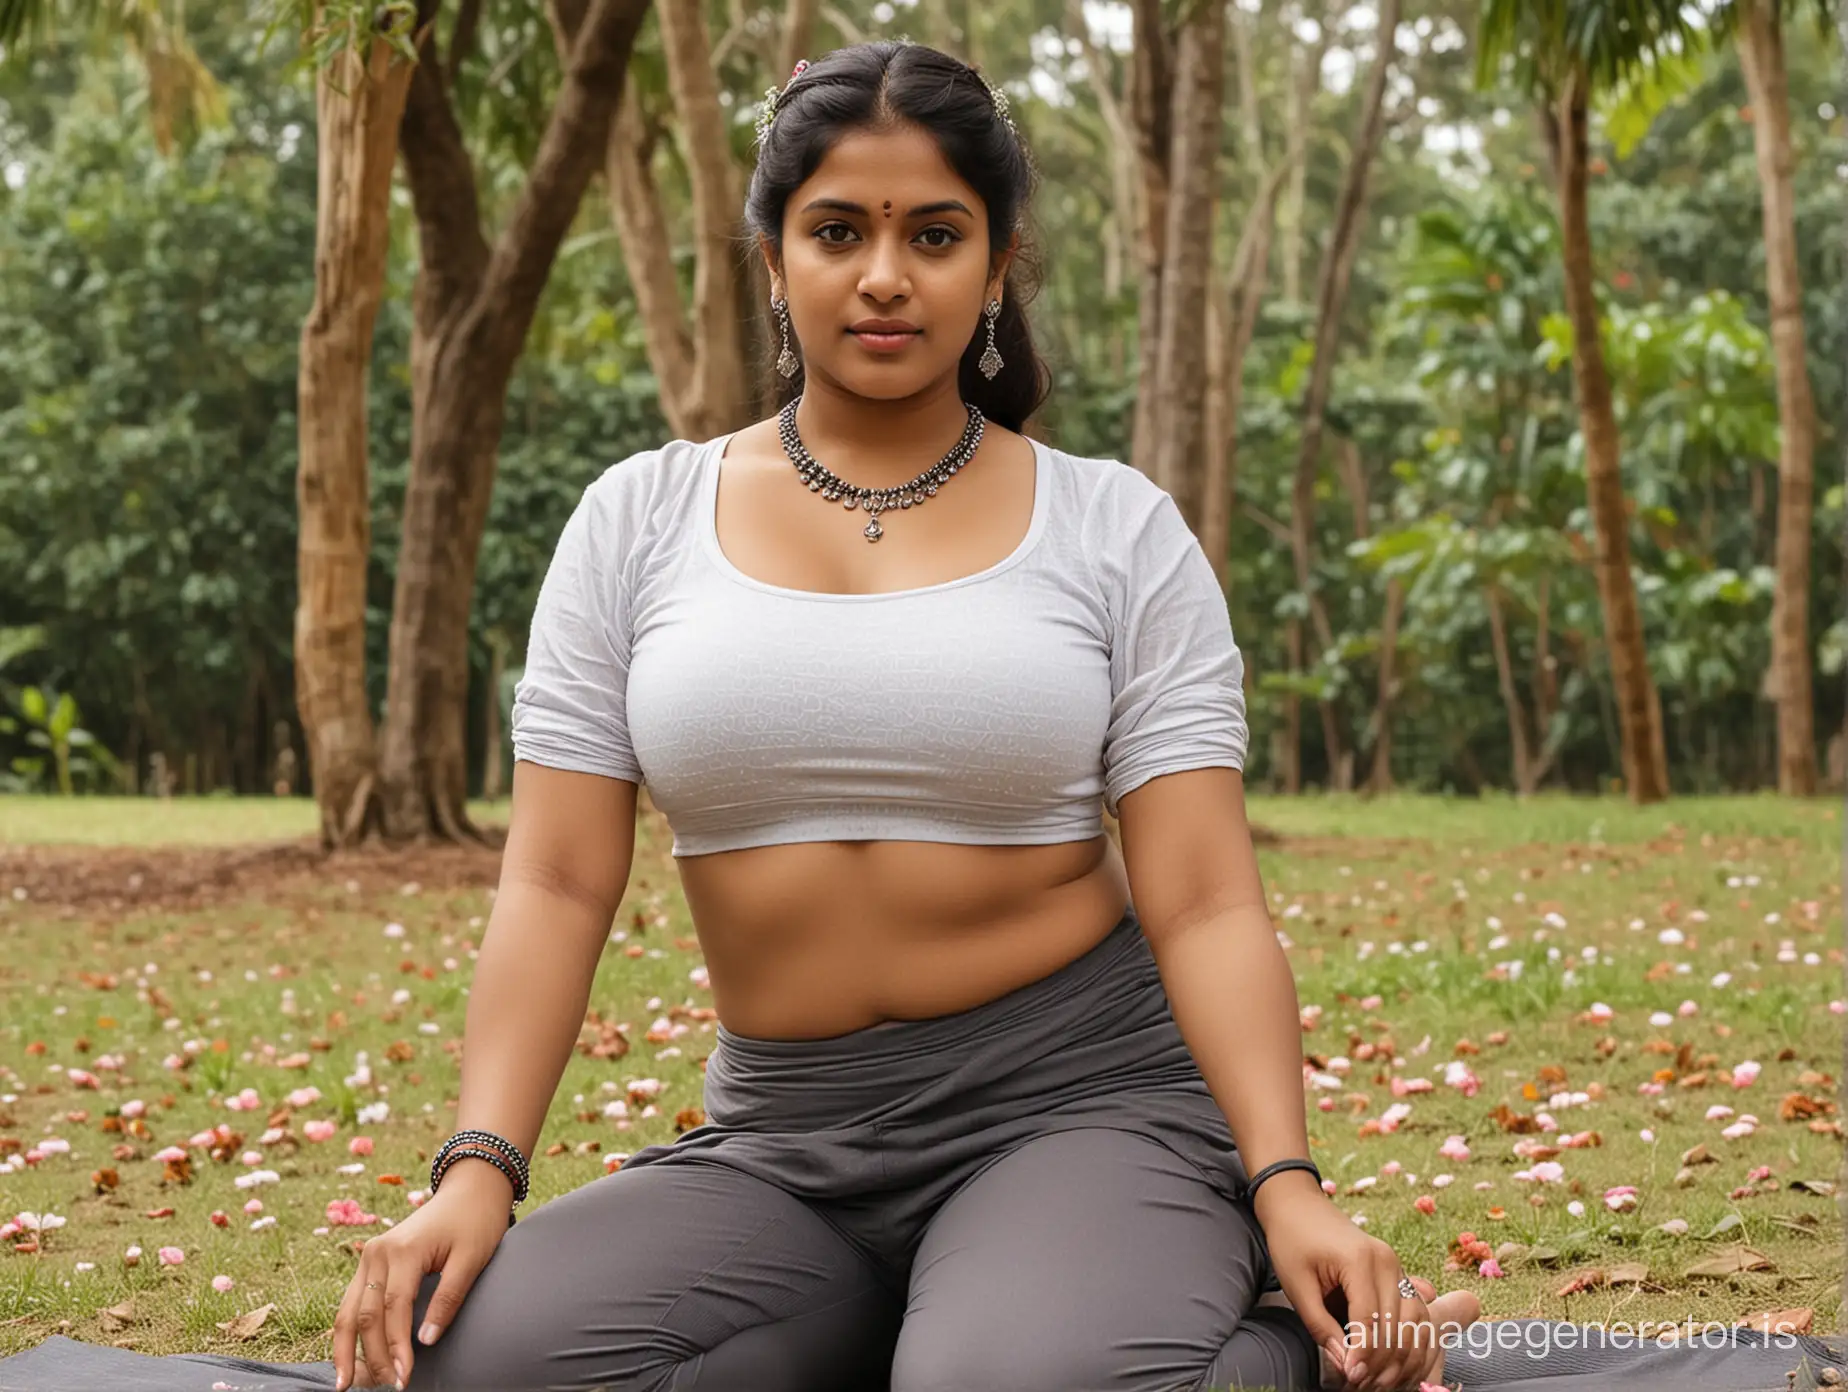 Curvy-Malayali-Yoga-Instructor-in-Sensual-Park-Poses